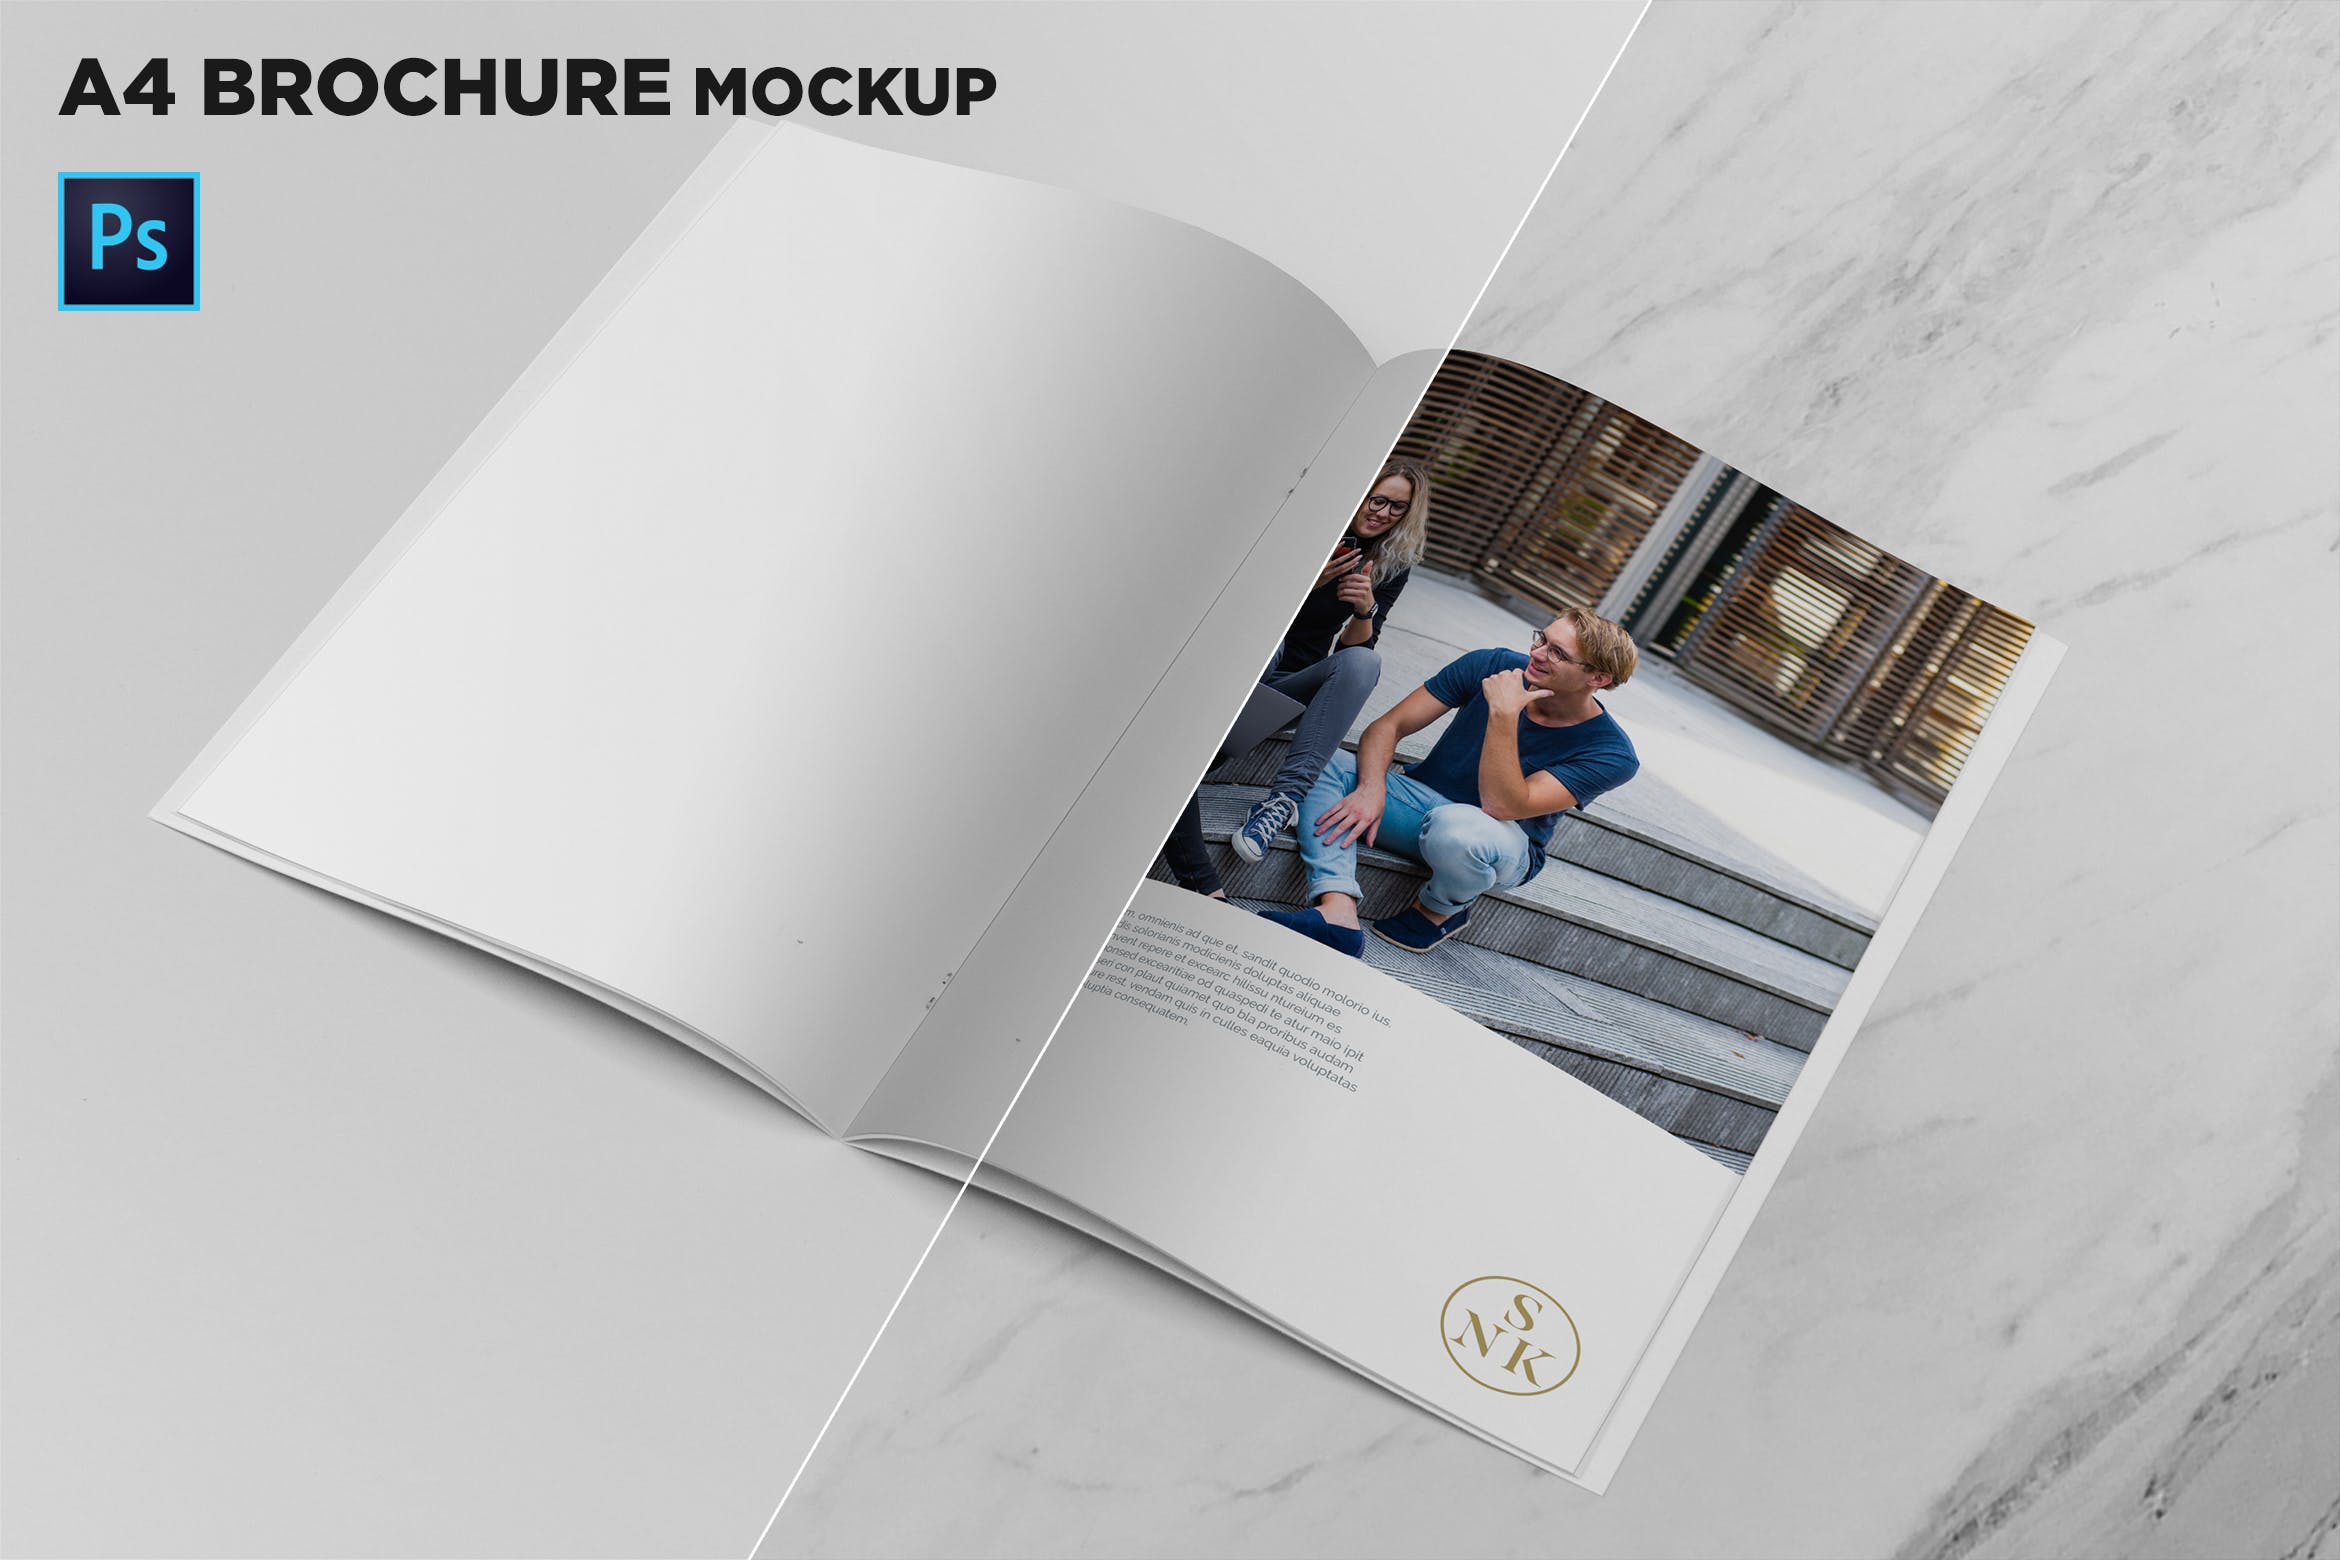 A4宣传小册子/企业画册内页排版设计效果图样机普贤居精选 A4 Brochure Mockup Open Pages插图